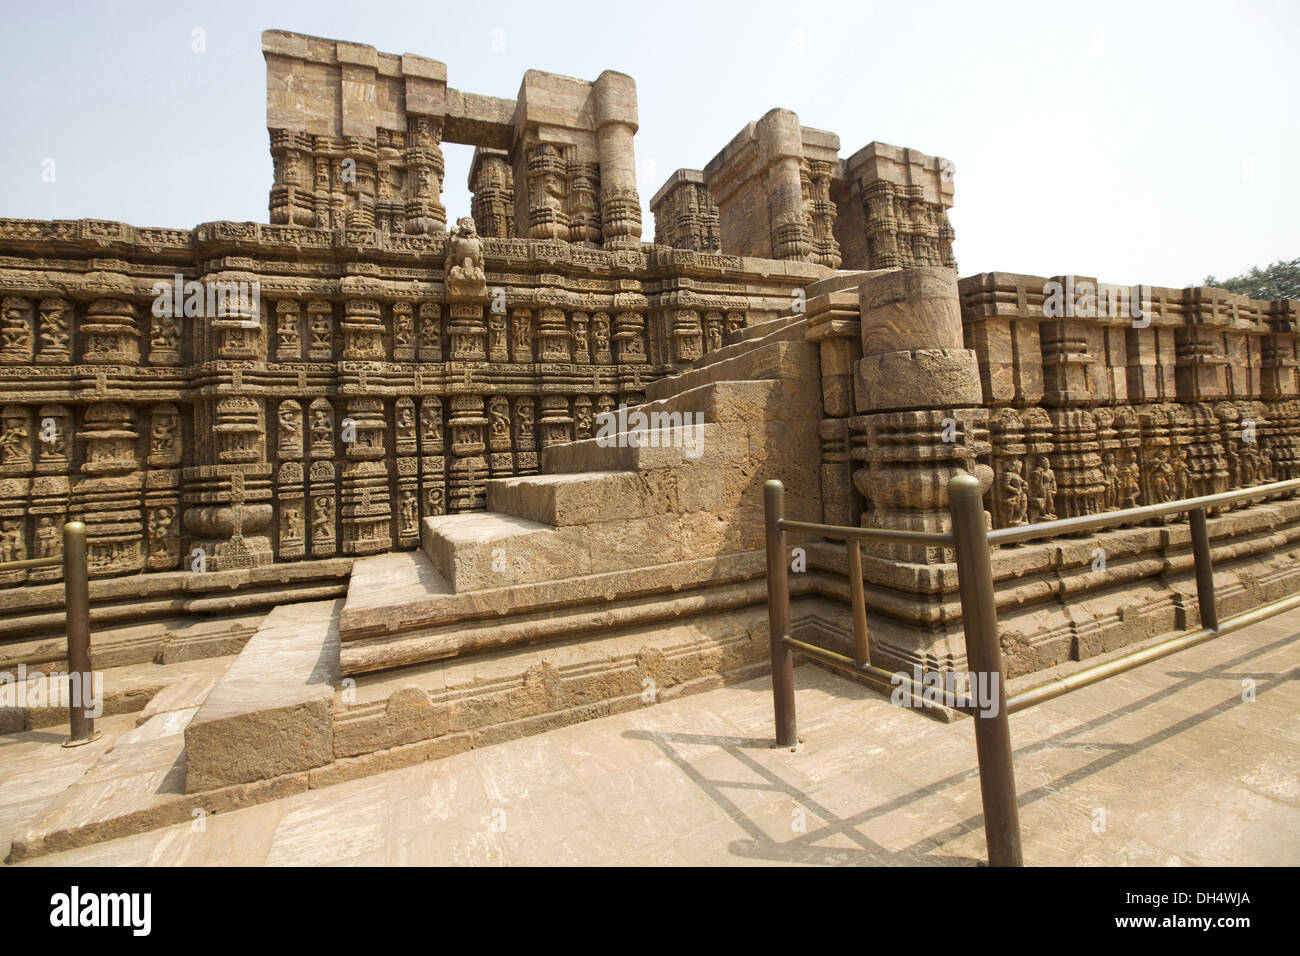 Carved Sculptures of dancers and musicians, Konark Sun Temple, Orissa India. UNESCO world heritage site Stock Photo